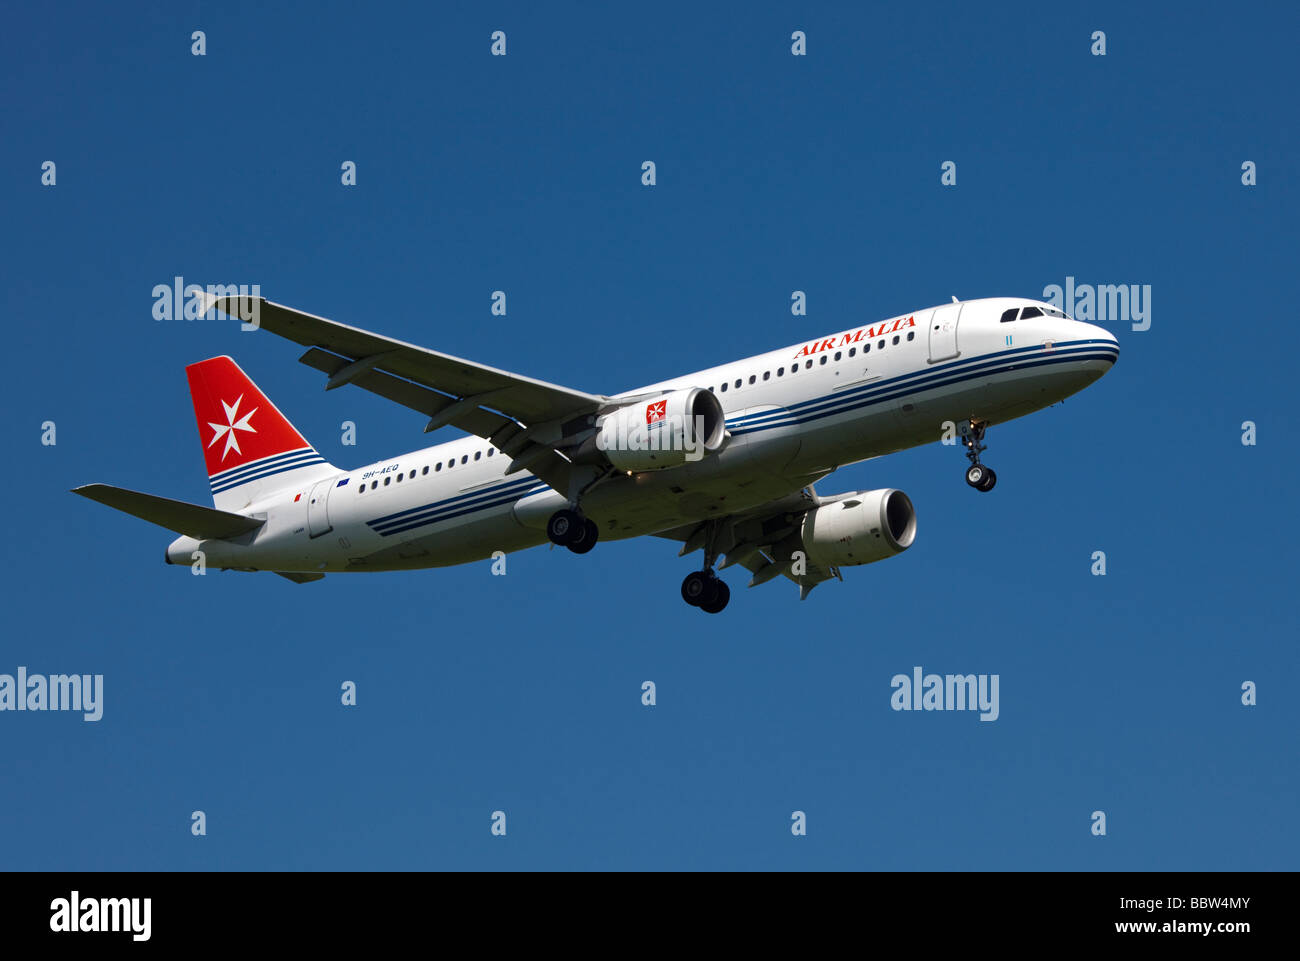 Air Malta Airbus A320 Aircraft landing at Gatwick Airport, England Stock Photo